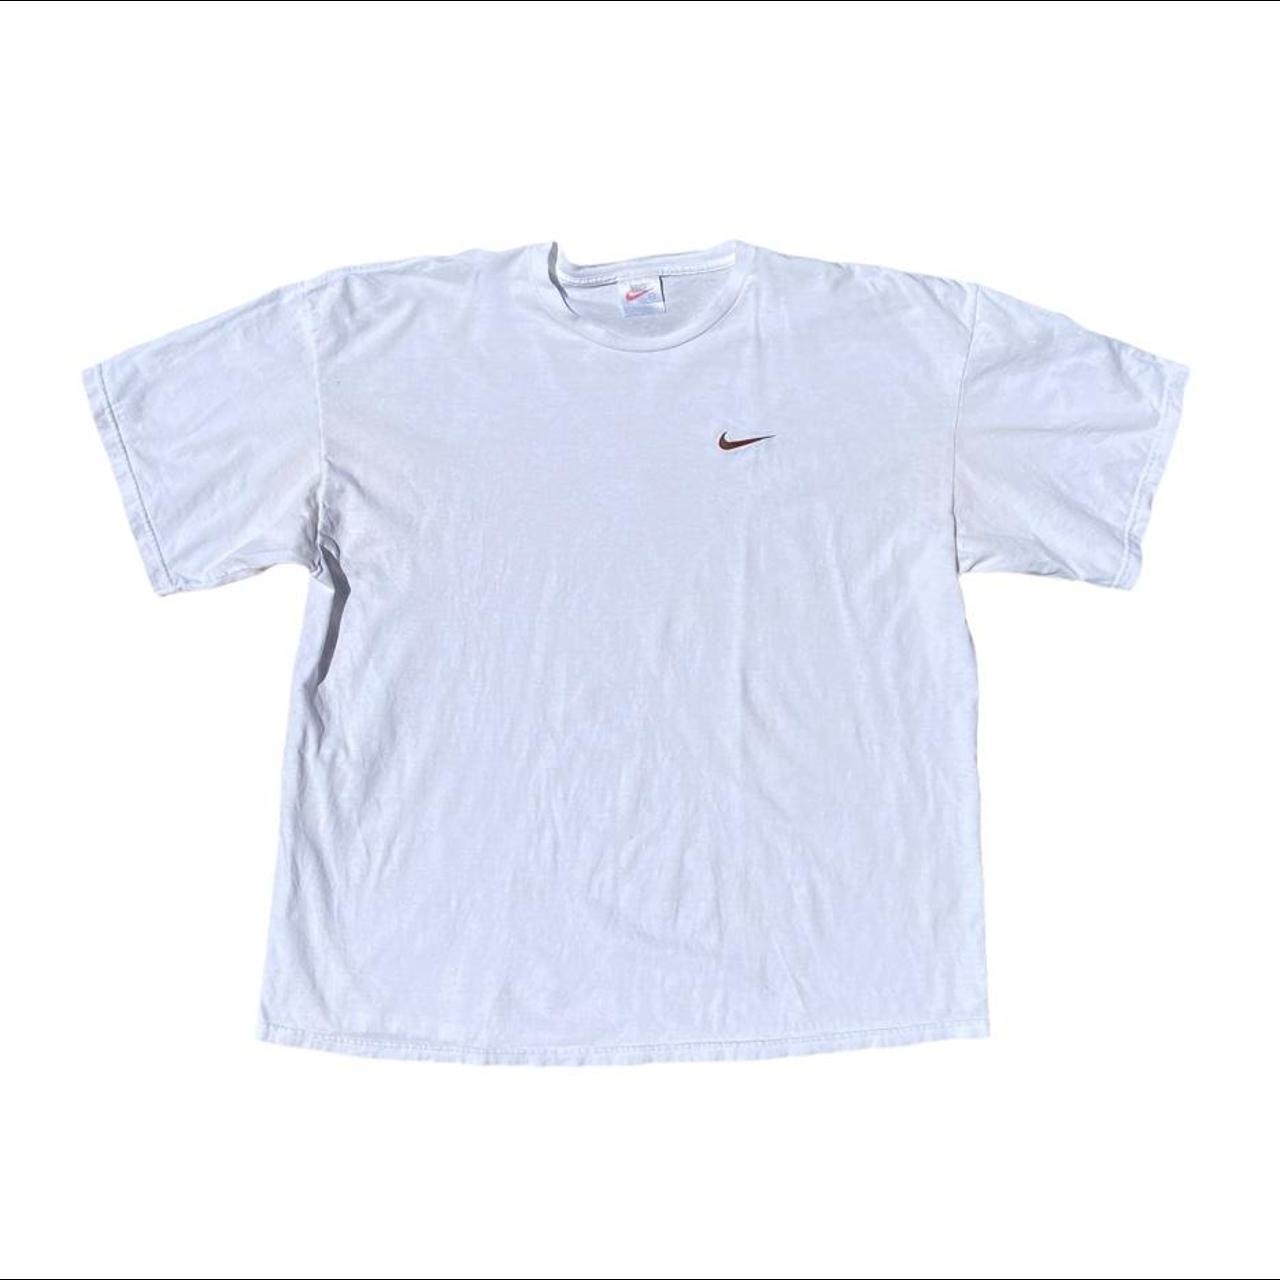 Product Image 1 - Vintage 90s Nike Shirt

Size: XX-Large

Flaws